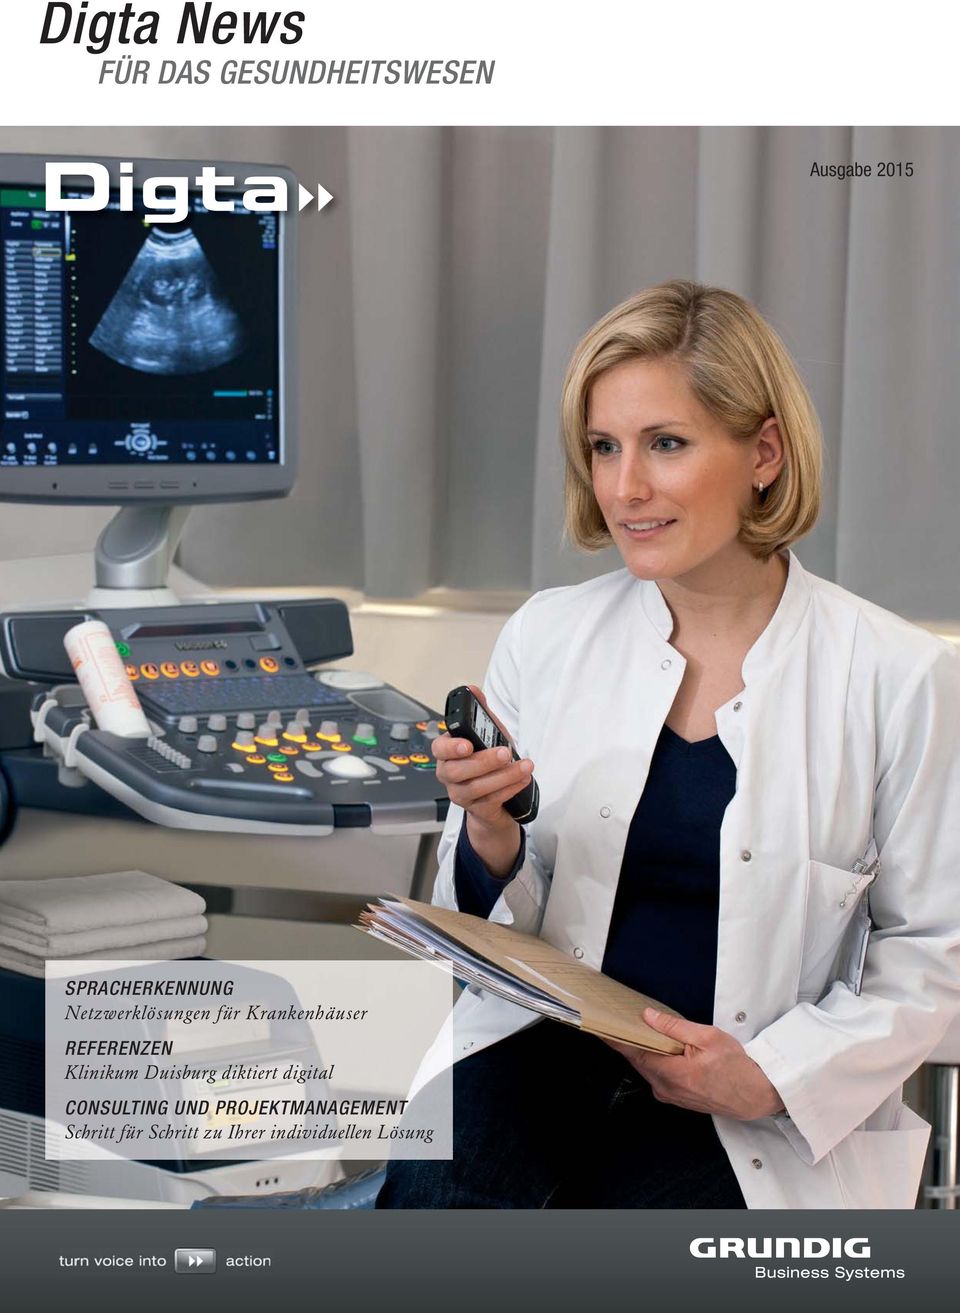 REFERENZEN Klinikum Duisburg diktiert digital CONSULTING